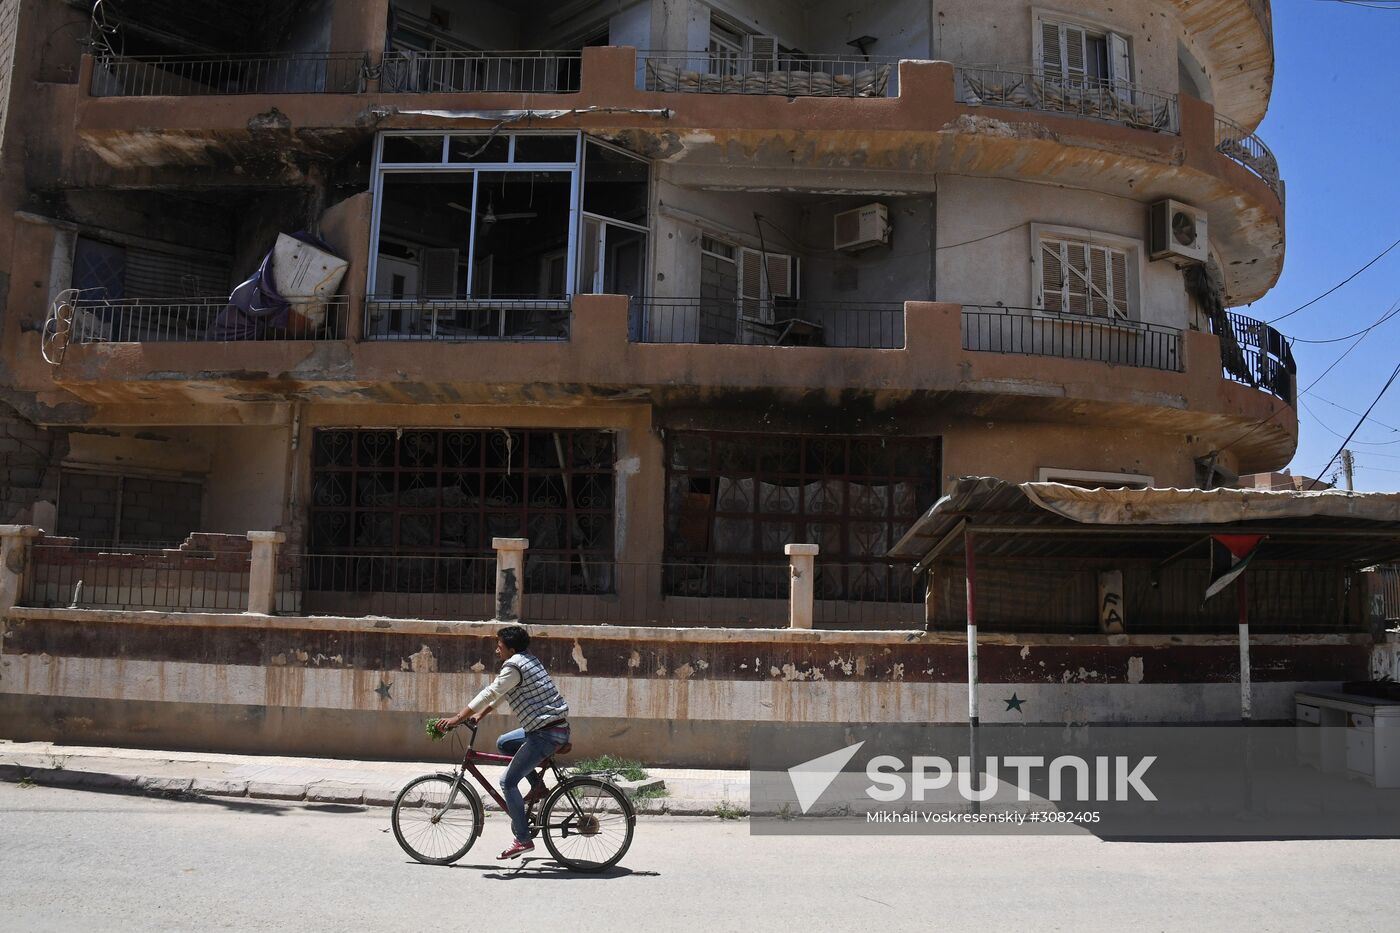 Situation in Deir ez-Zor, Syria